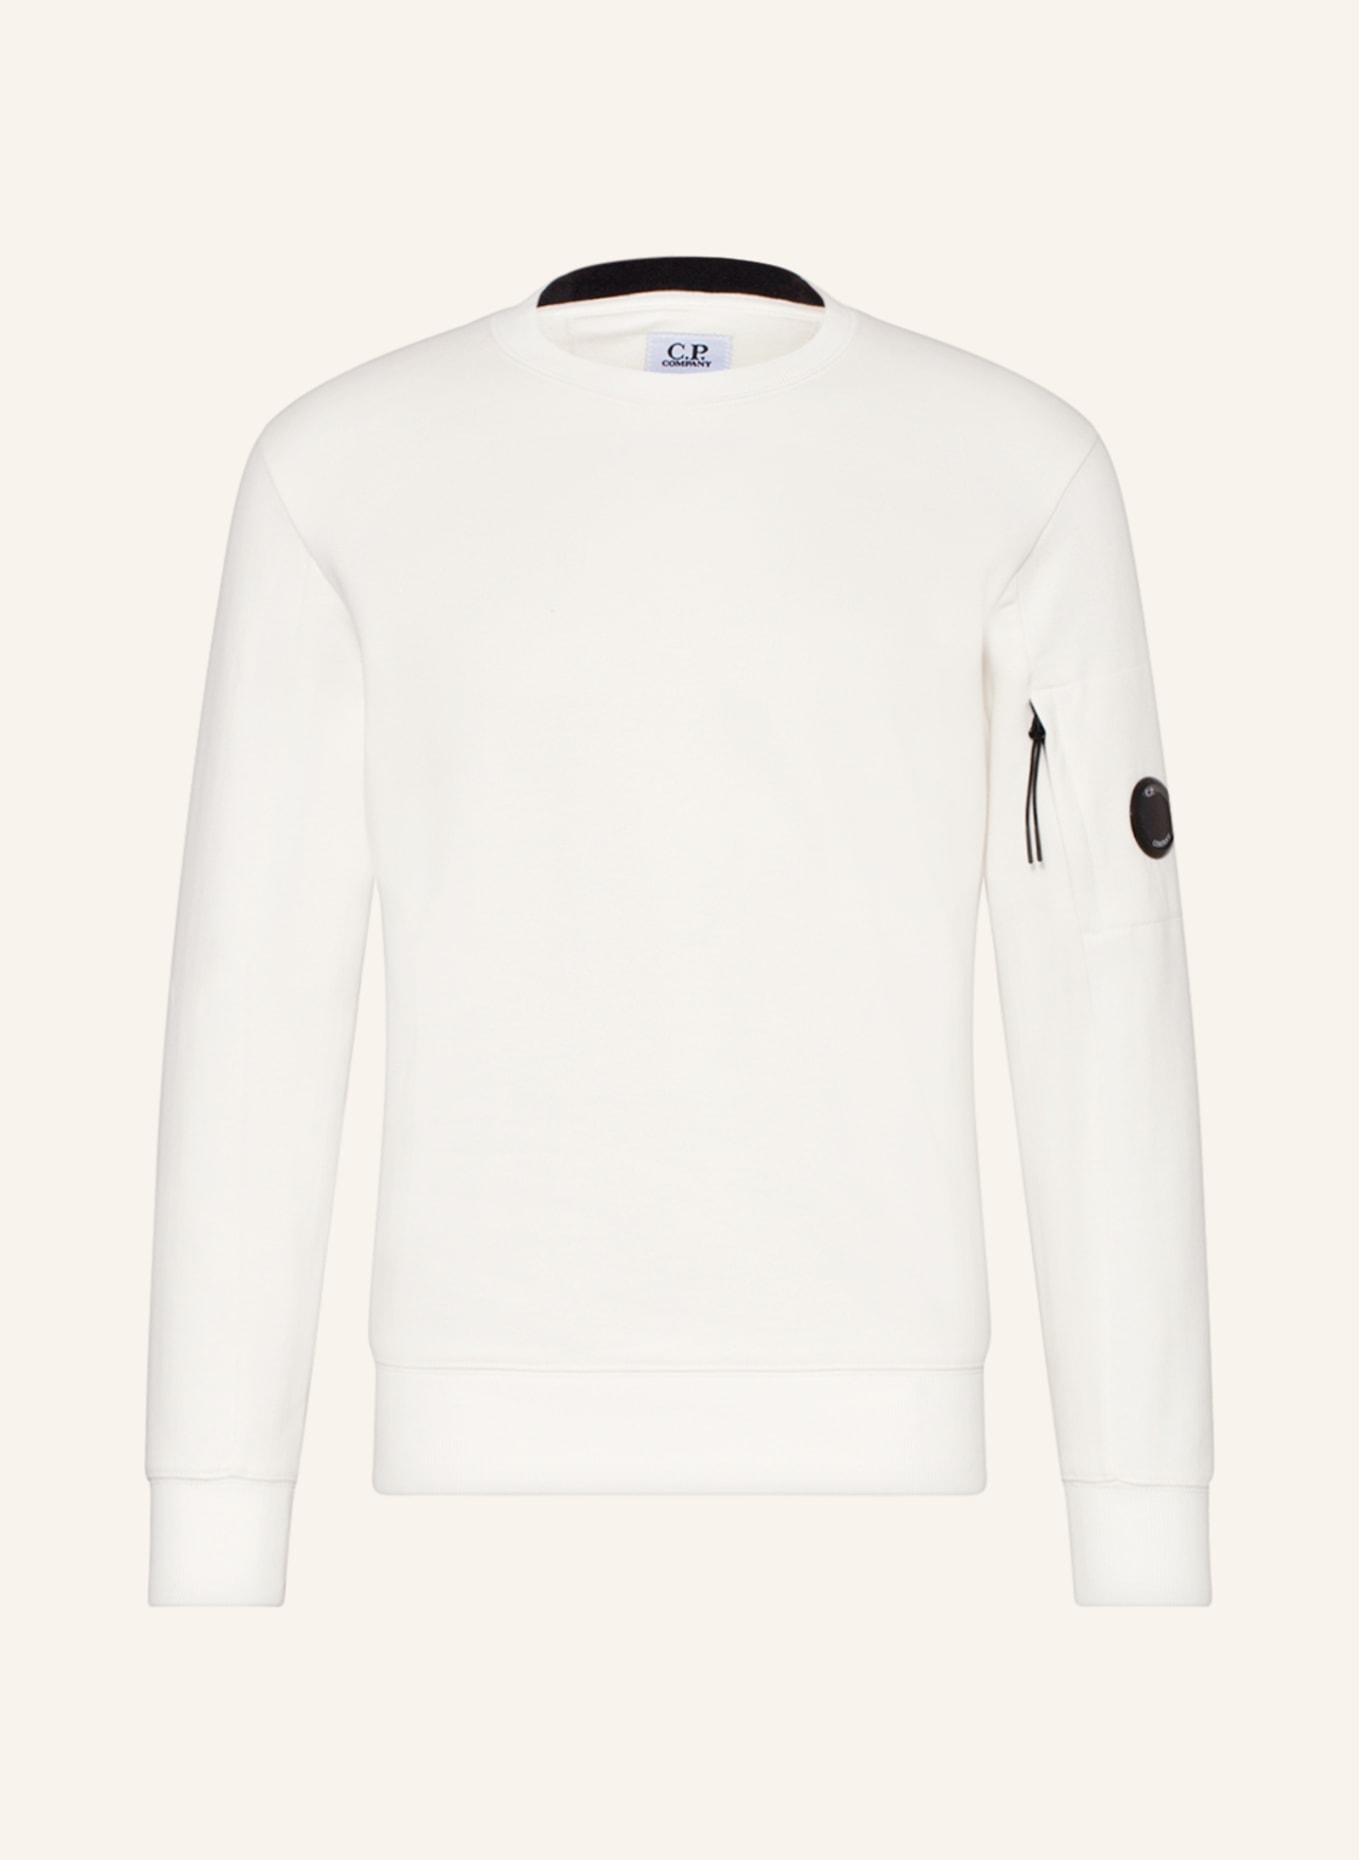 C.P. COMPANY Sweatshirt, Farbe: WEISS (Bild 1)